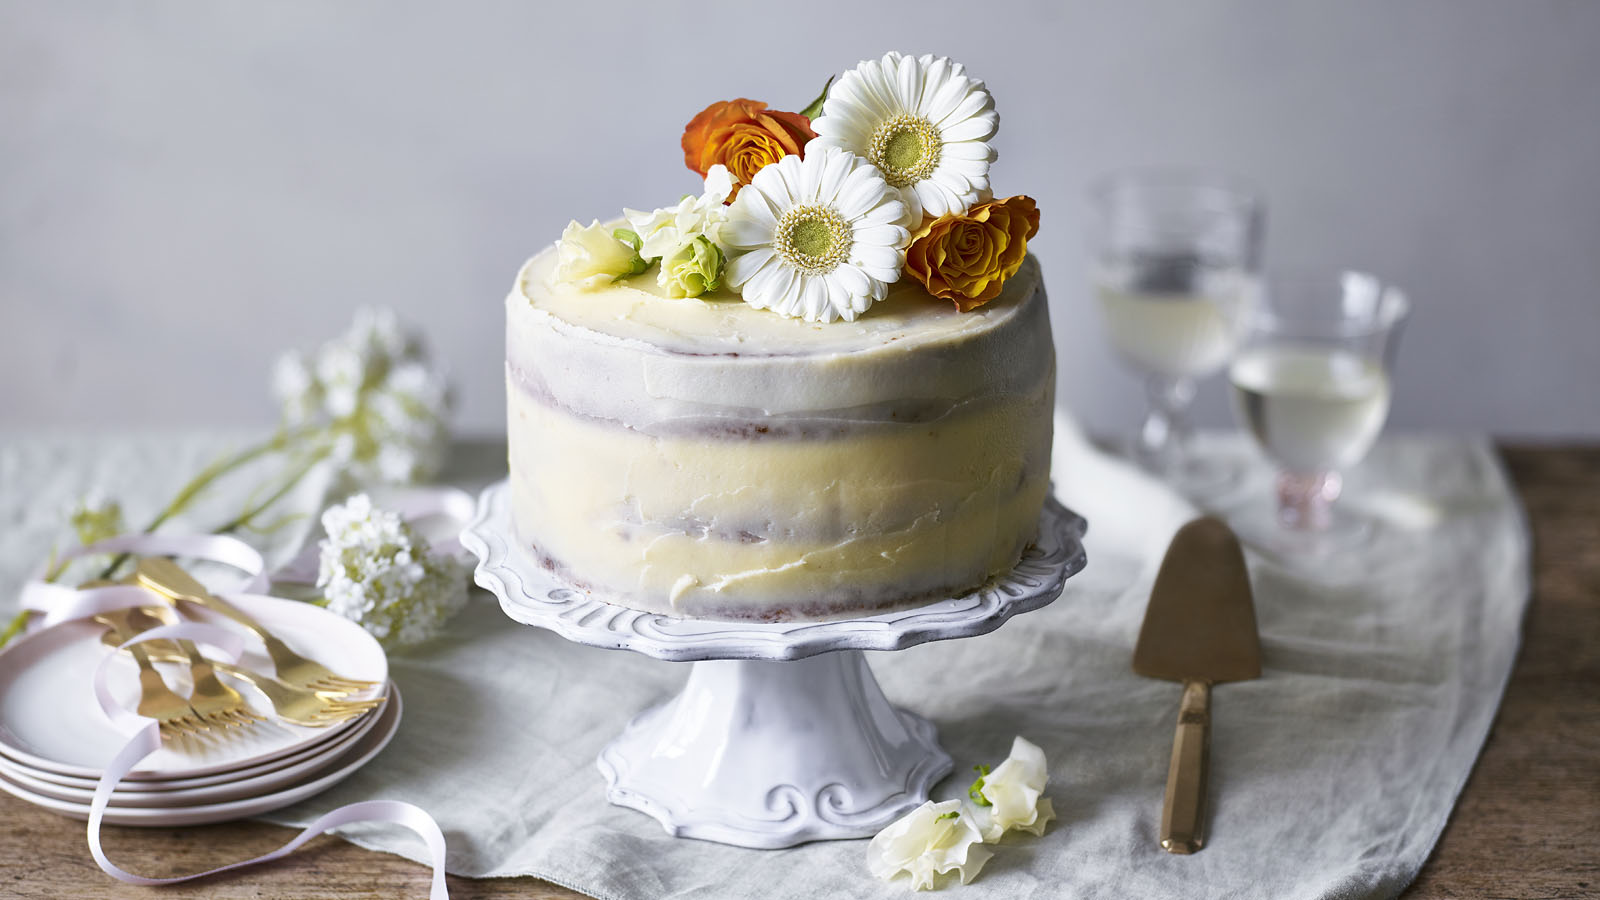 Lemon and elderflower cake recipe - BBC Food